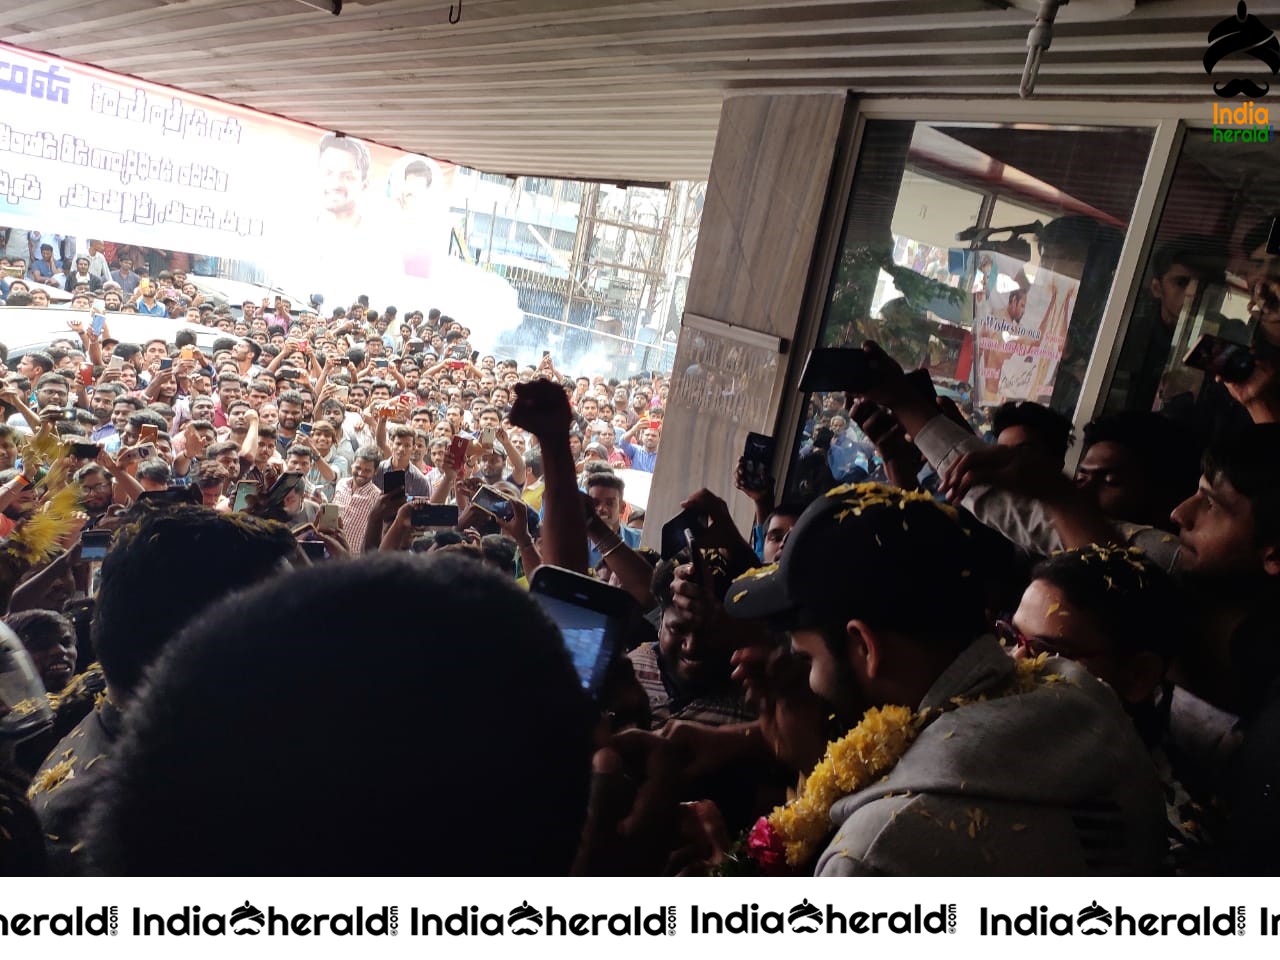 Actor Sai Dharam Tej mobbed by Crowd